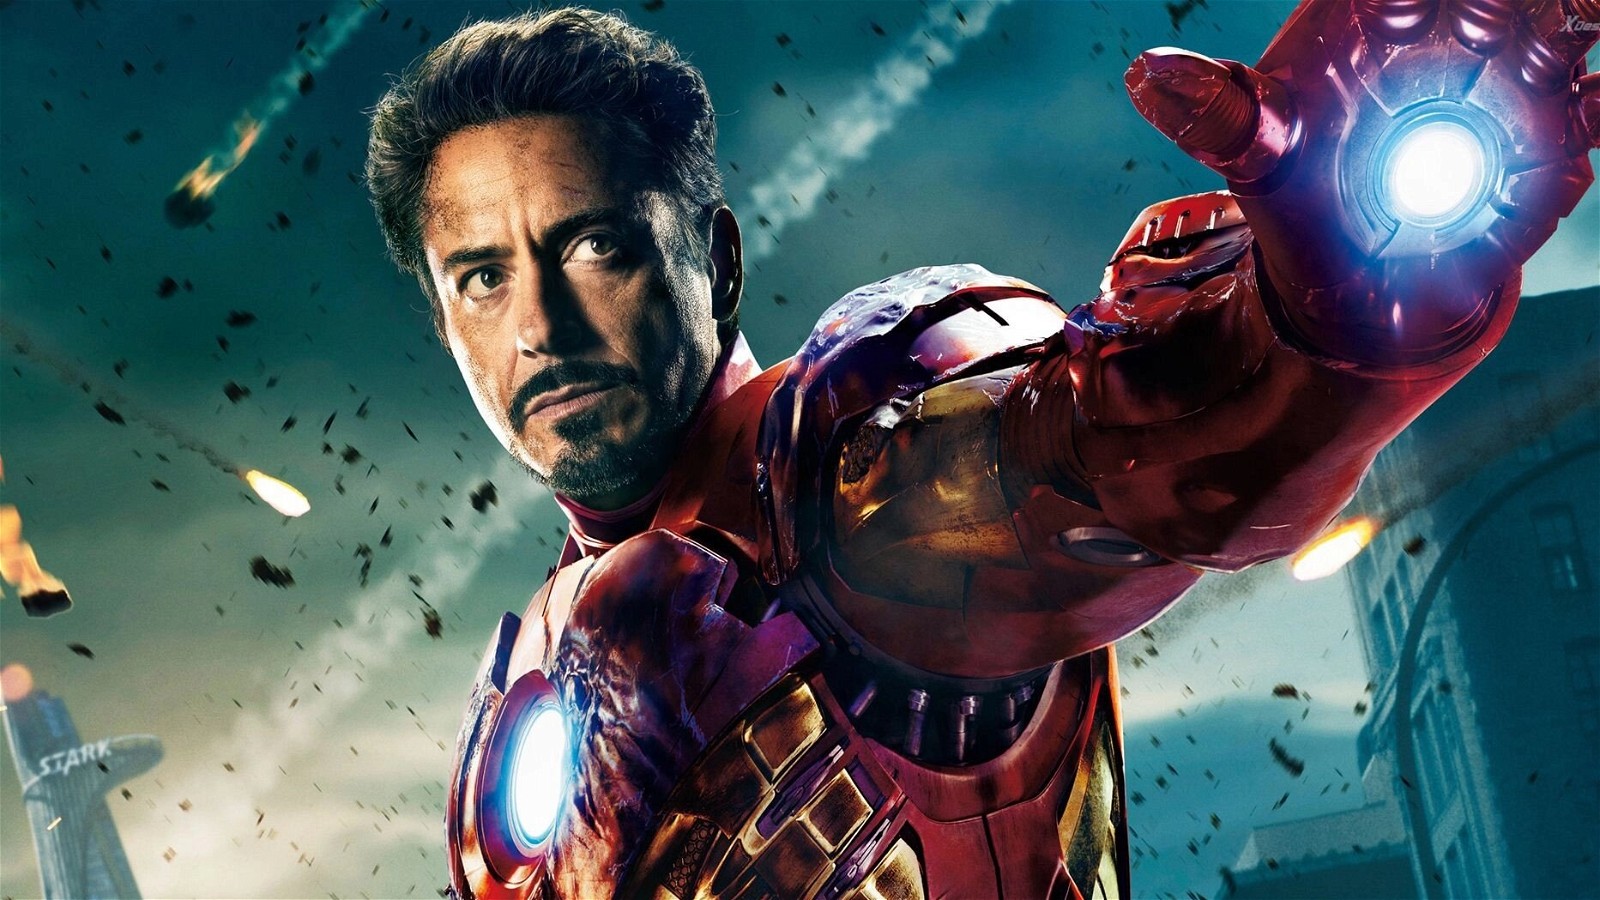 Robert Downey Jr. in Iron Man as Tony Stark